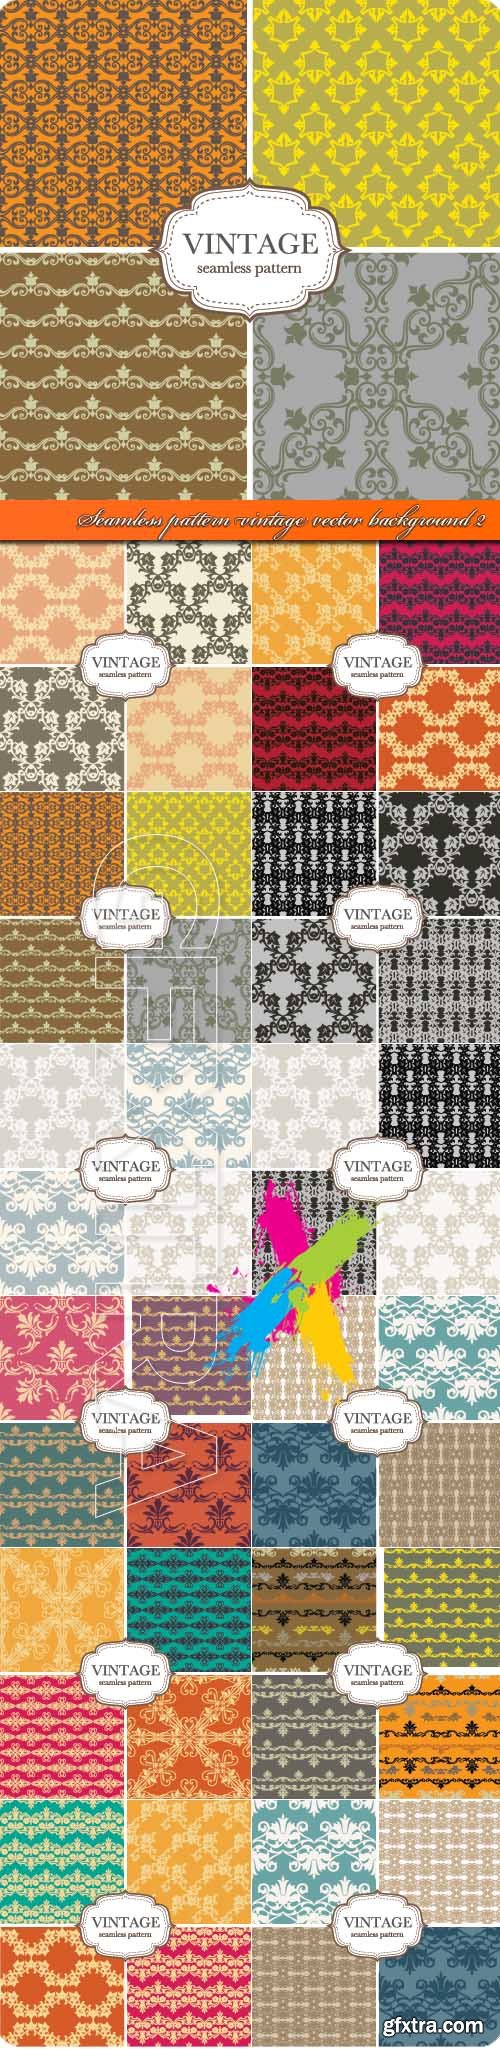 Seamless pattern vintage vector background 2